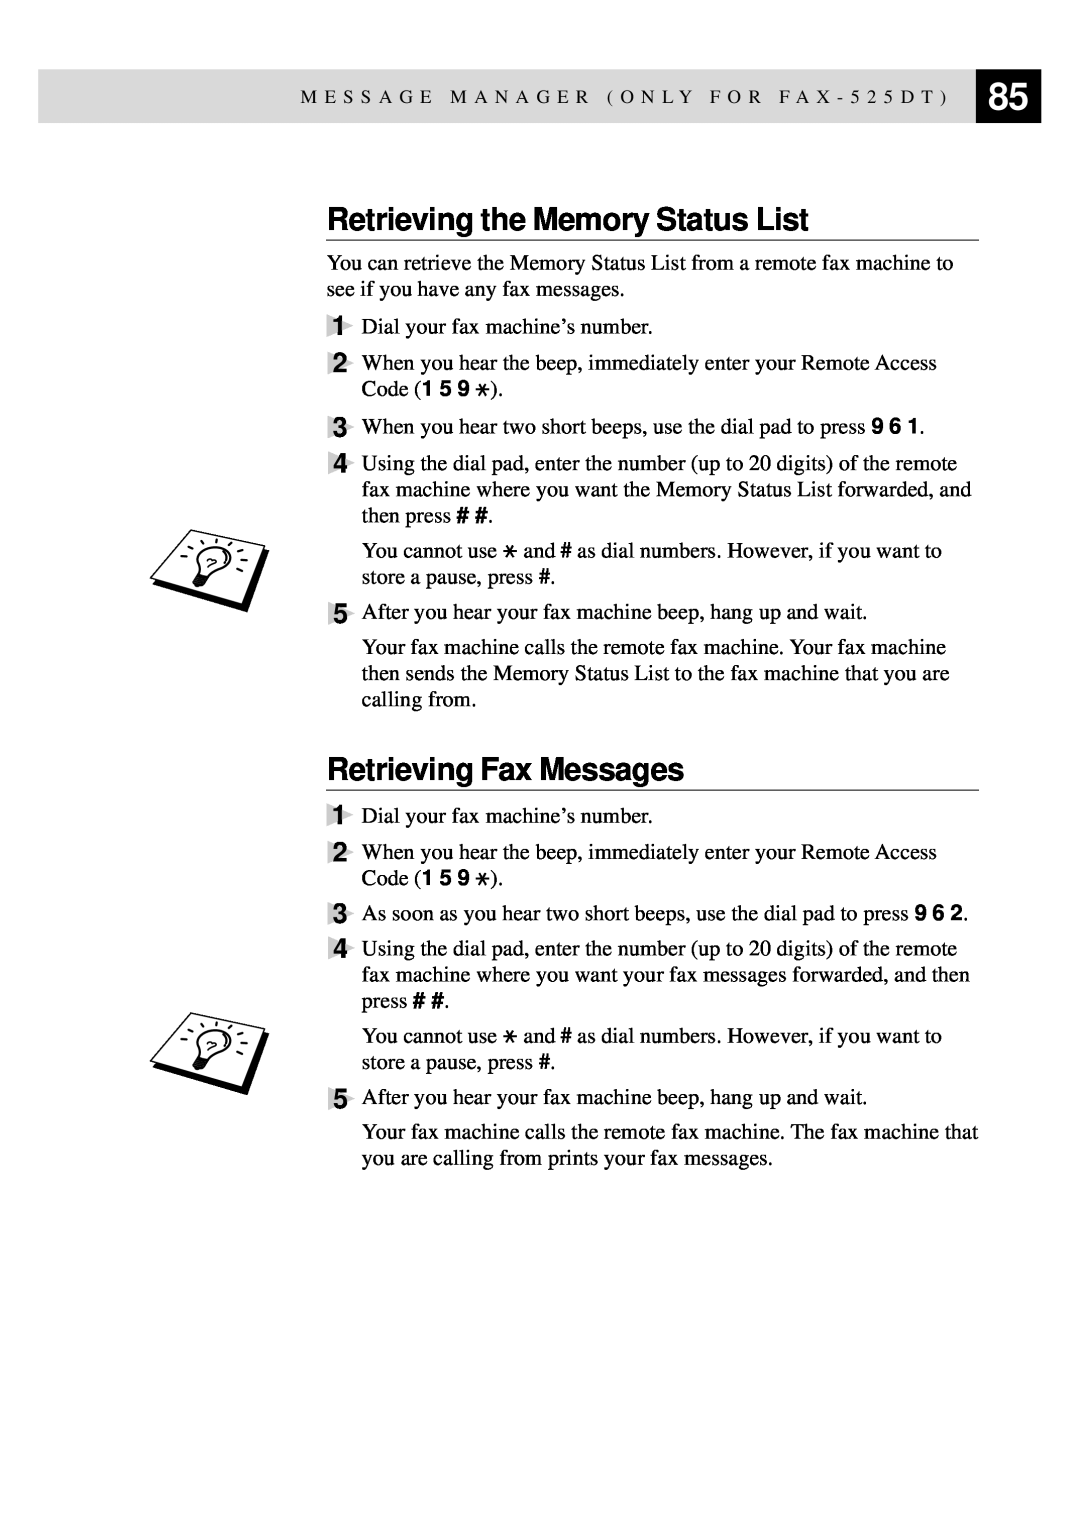 Brother 515 manual Retrieving the Memory Status List, Retrieving Fax Messages 